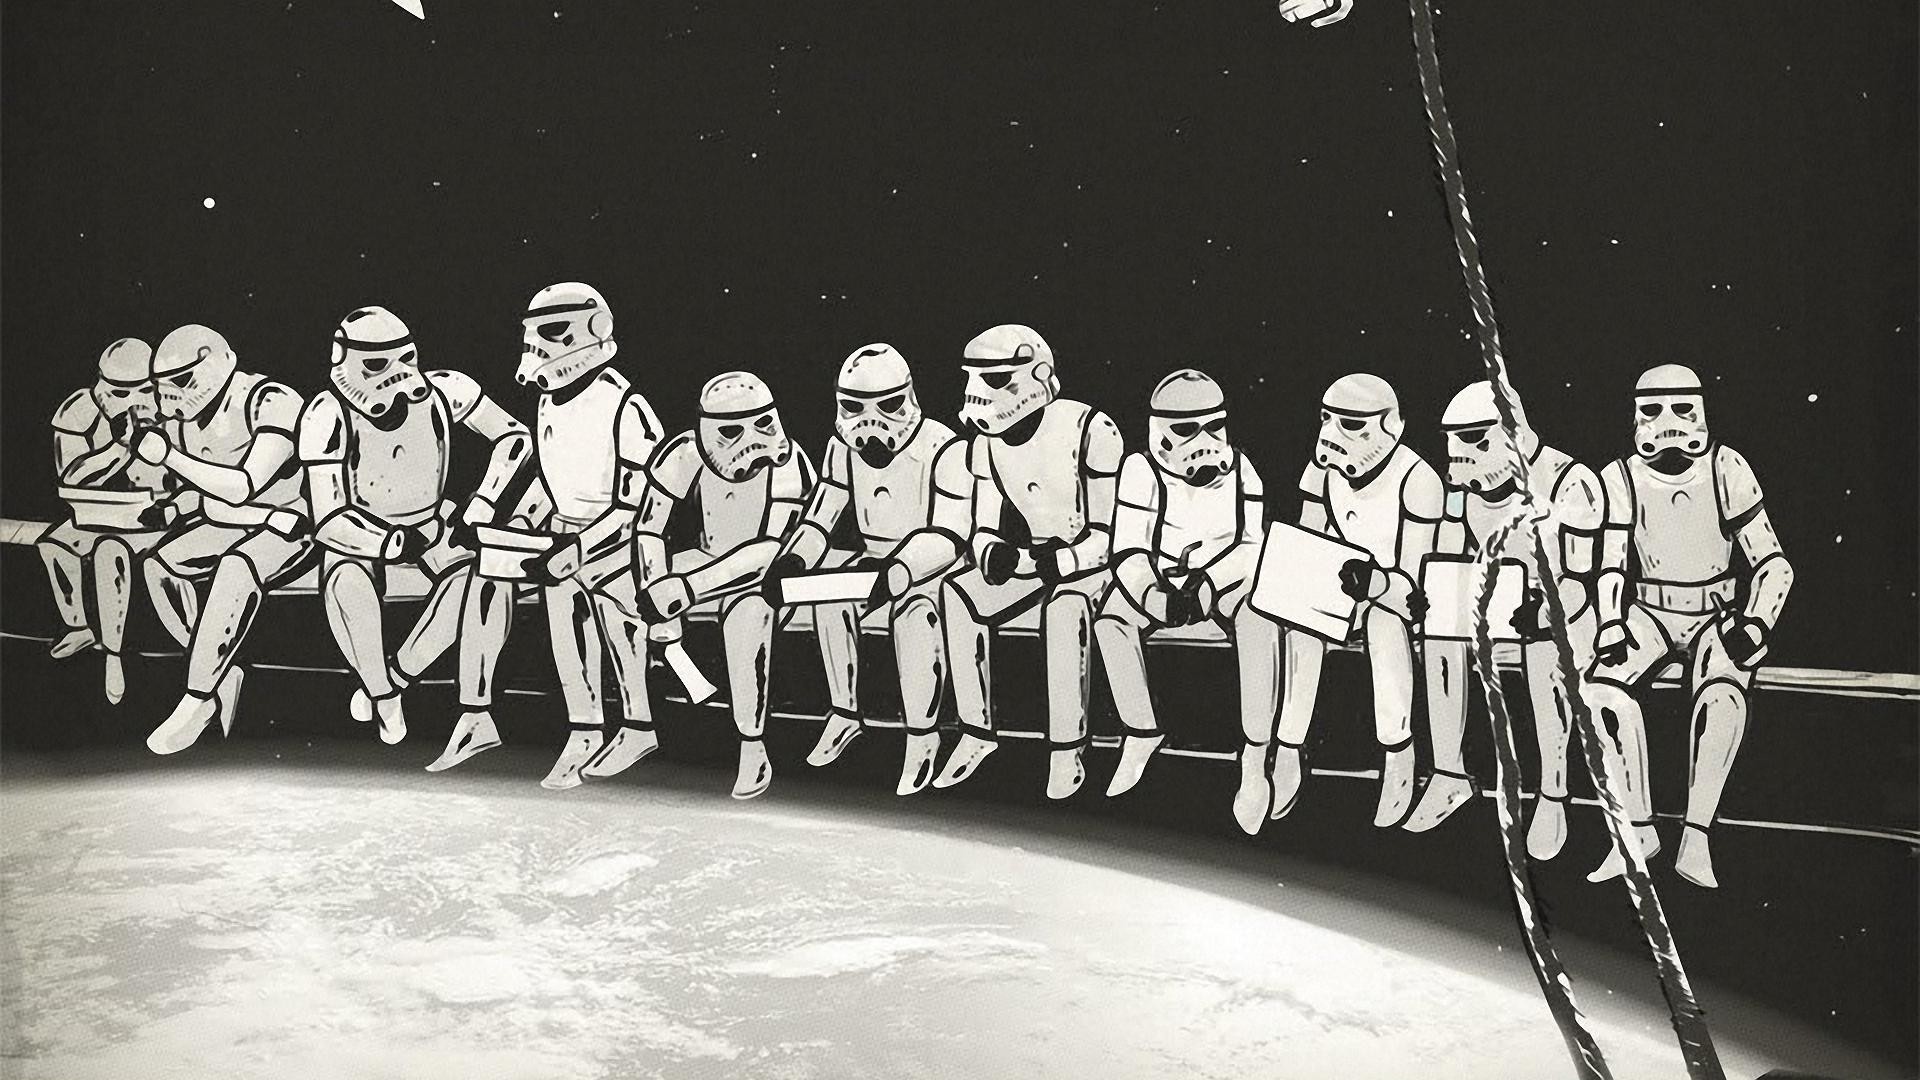 General 1920x1080 stormtrooper artwork workers crossover Star Wars parody monochrome sitting